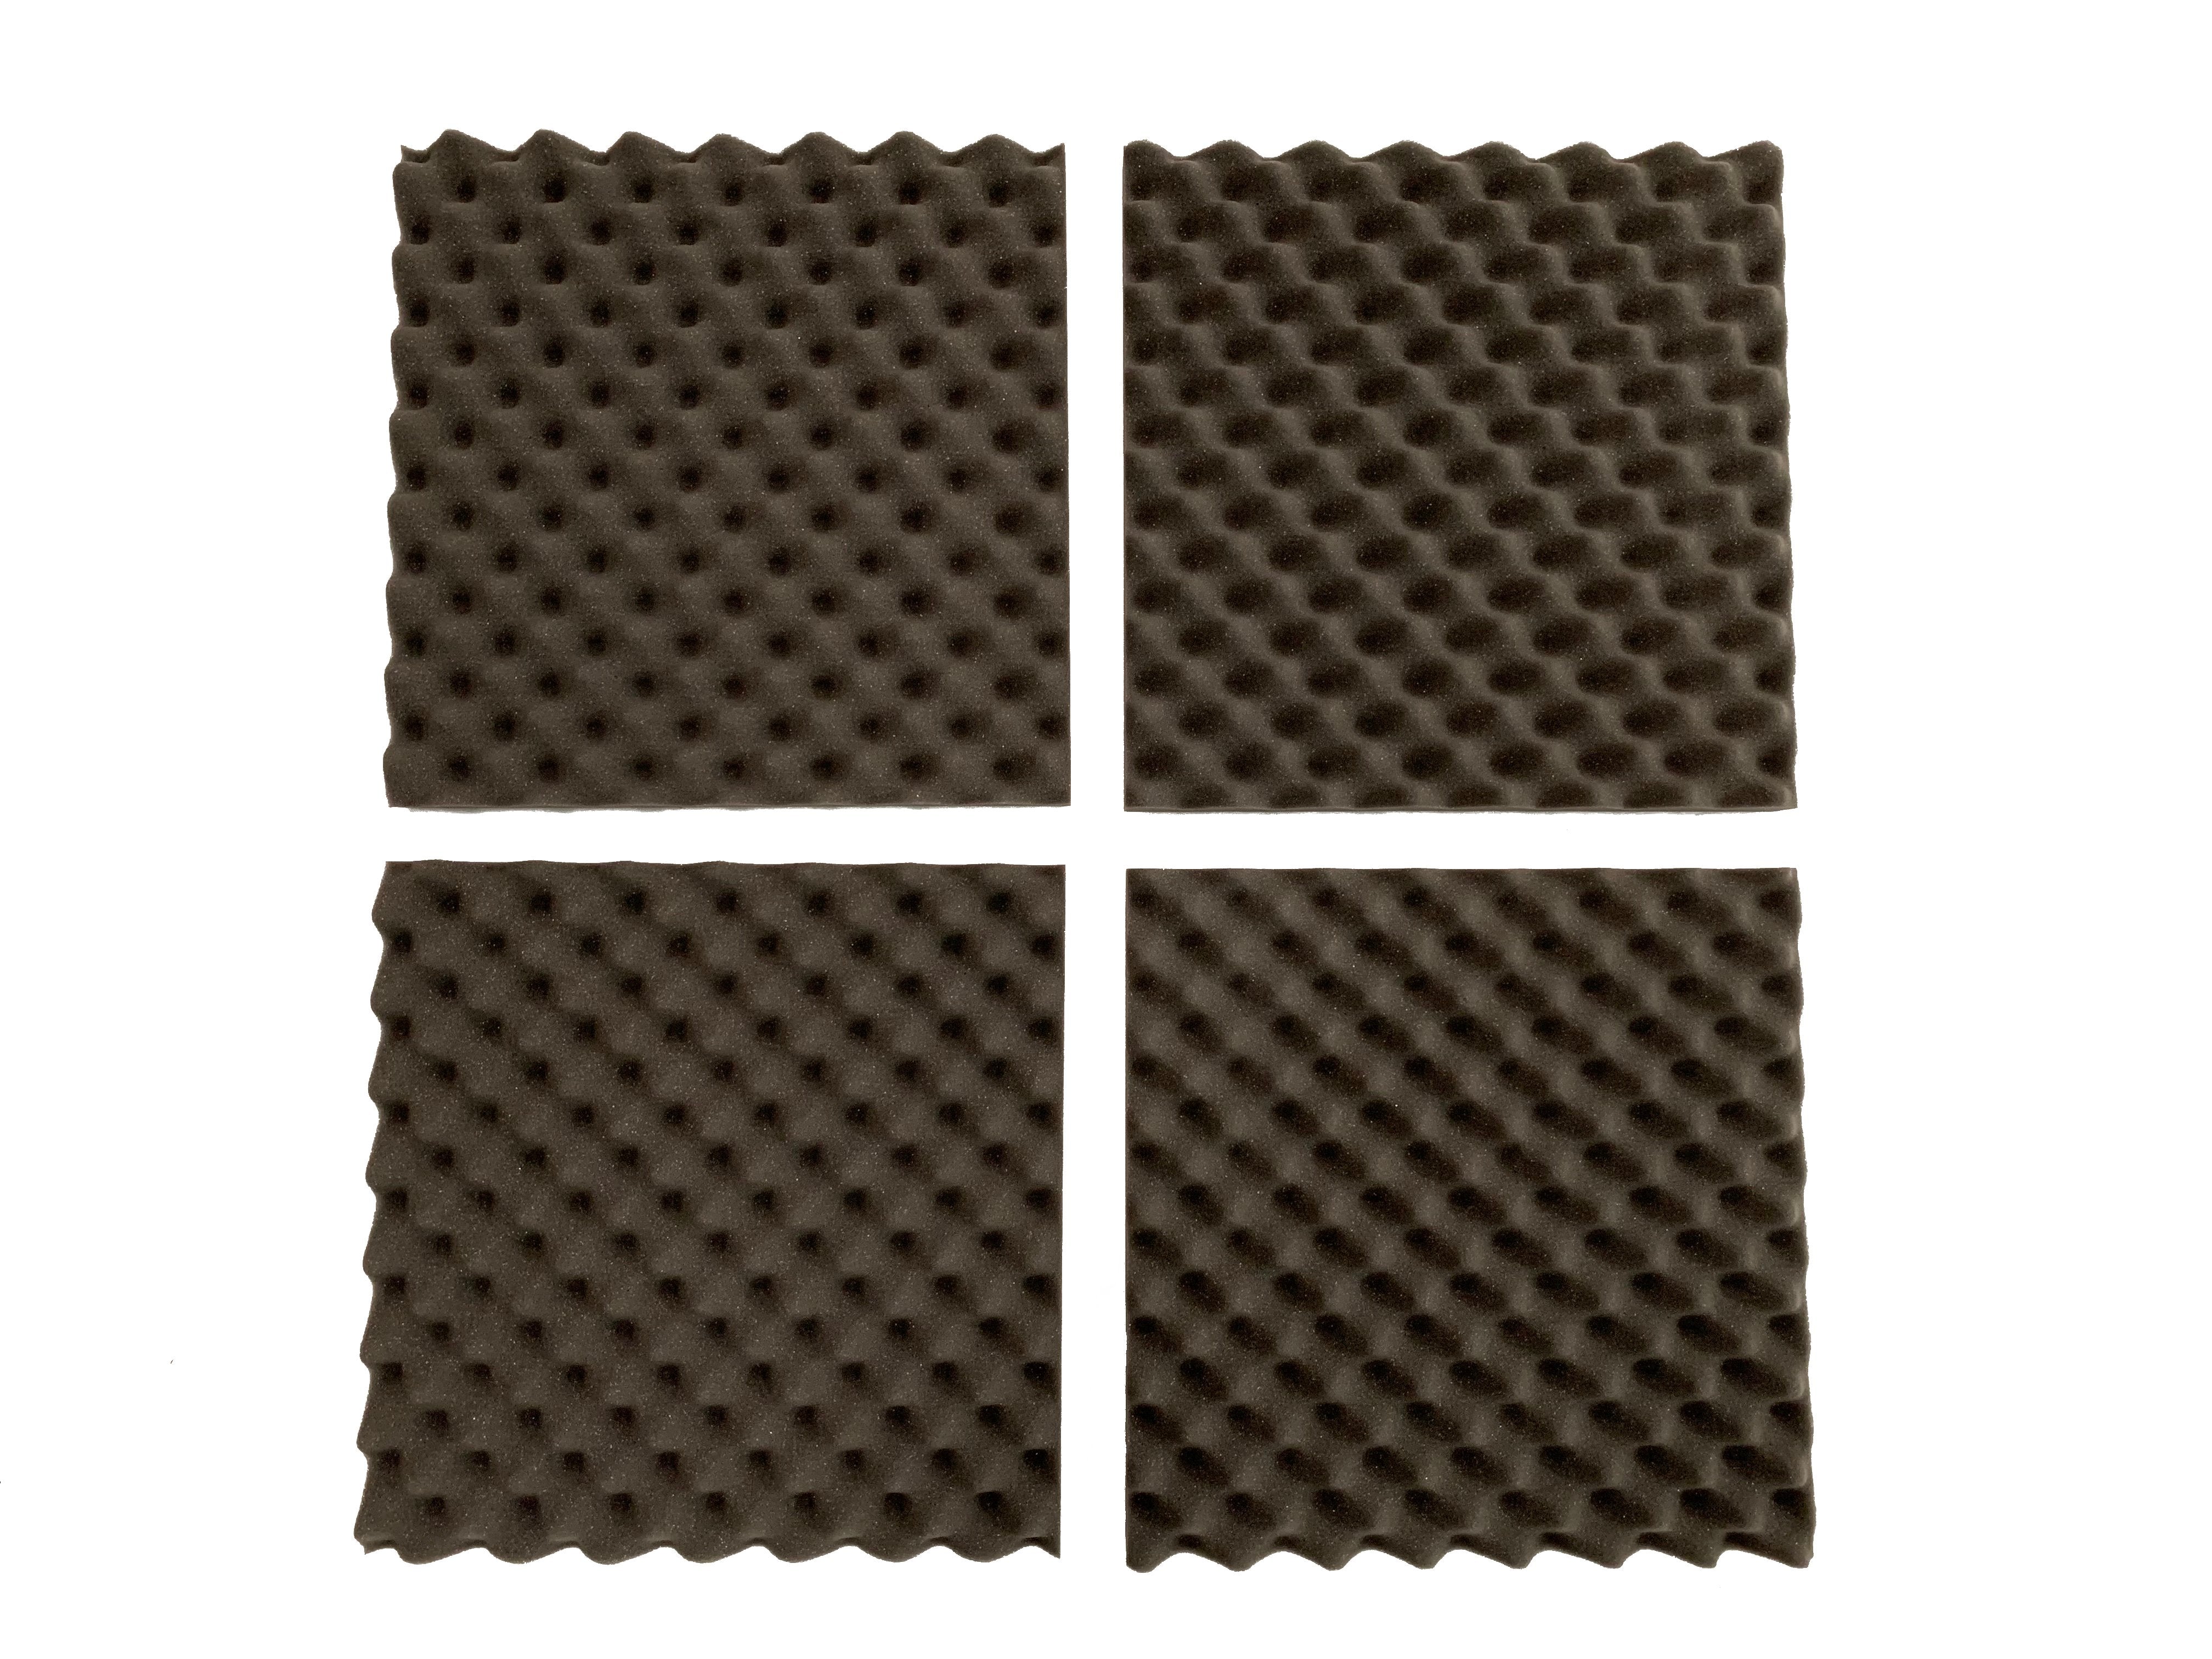 Euphonic F.A.T Standard Acoustic Studio Foam Tile Pack - Advanced Acoustics